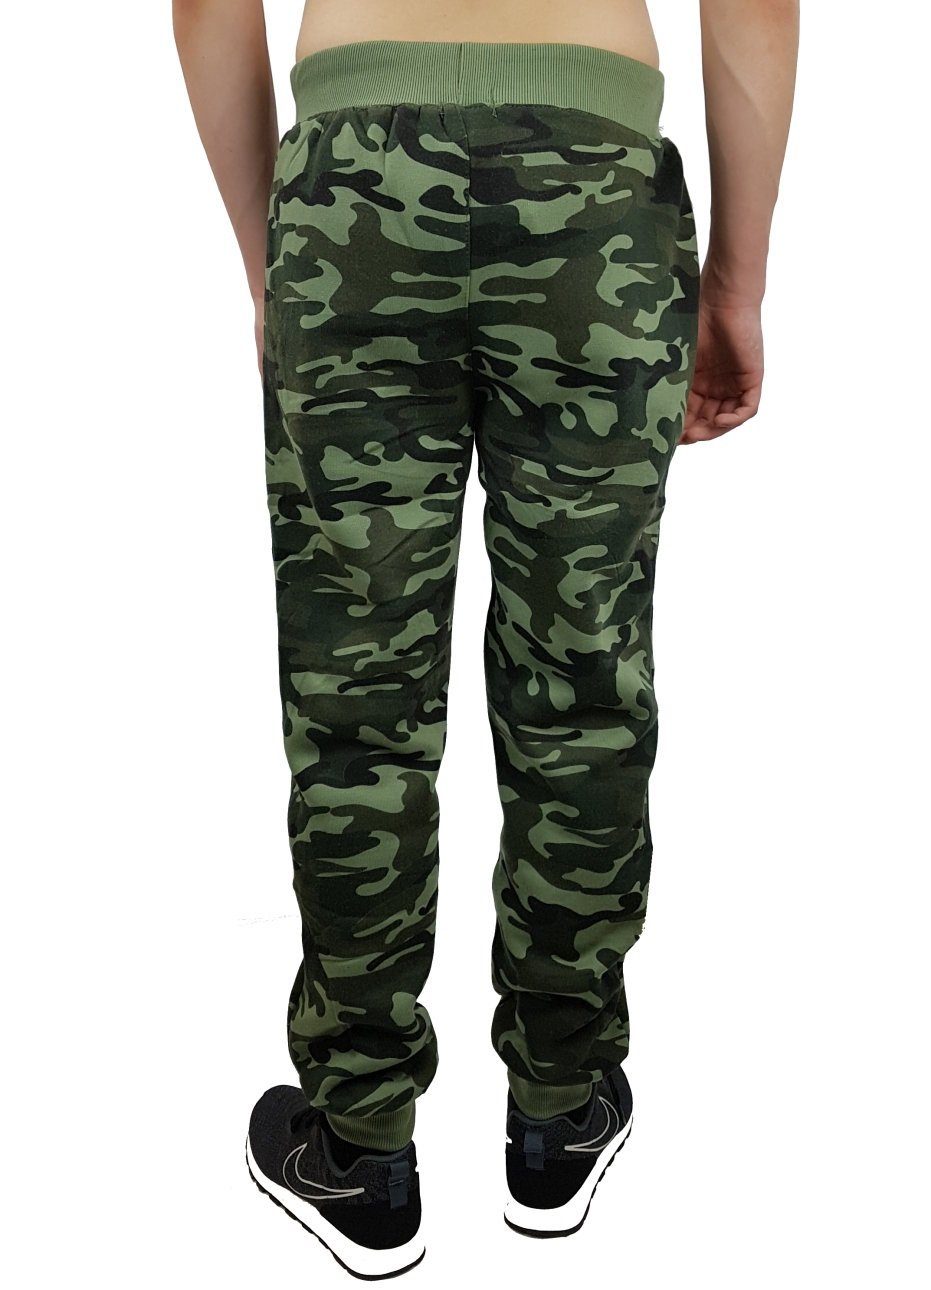 Boy Freizeithose, Jogginghose, H1002 Jogginghose Fashion Camouflage, Army